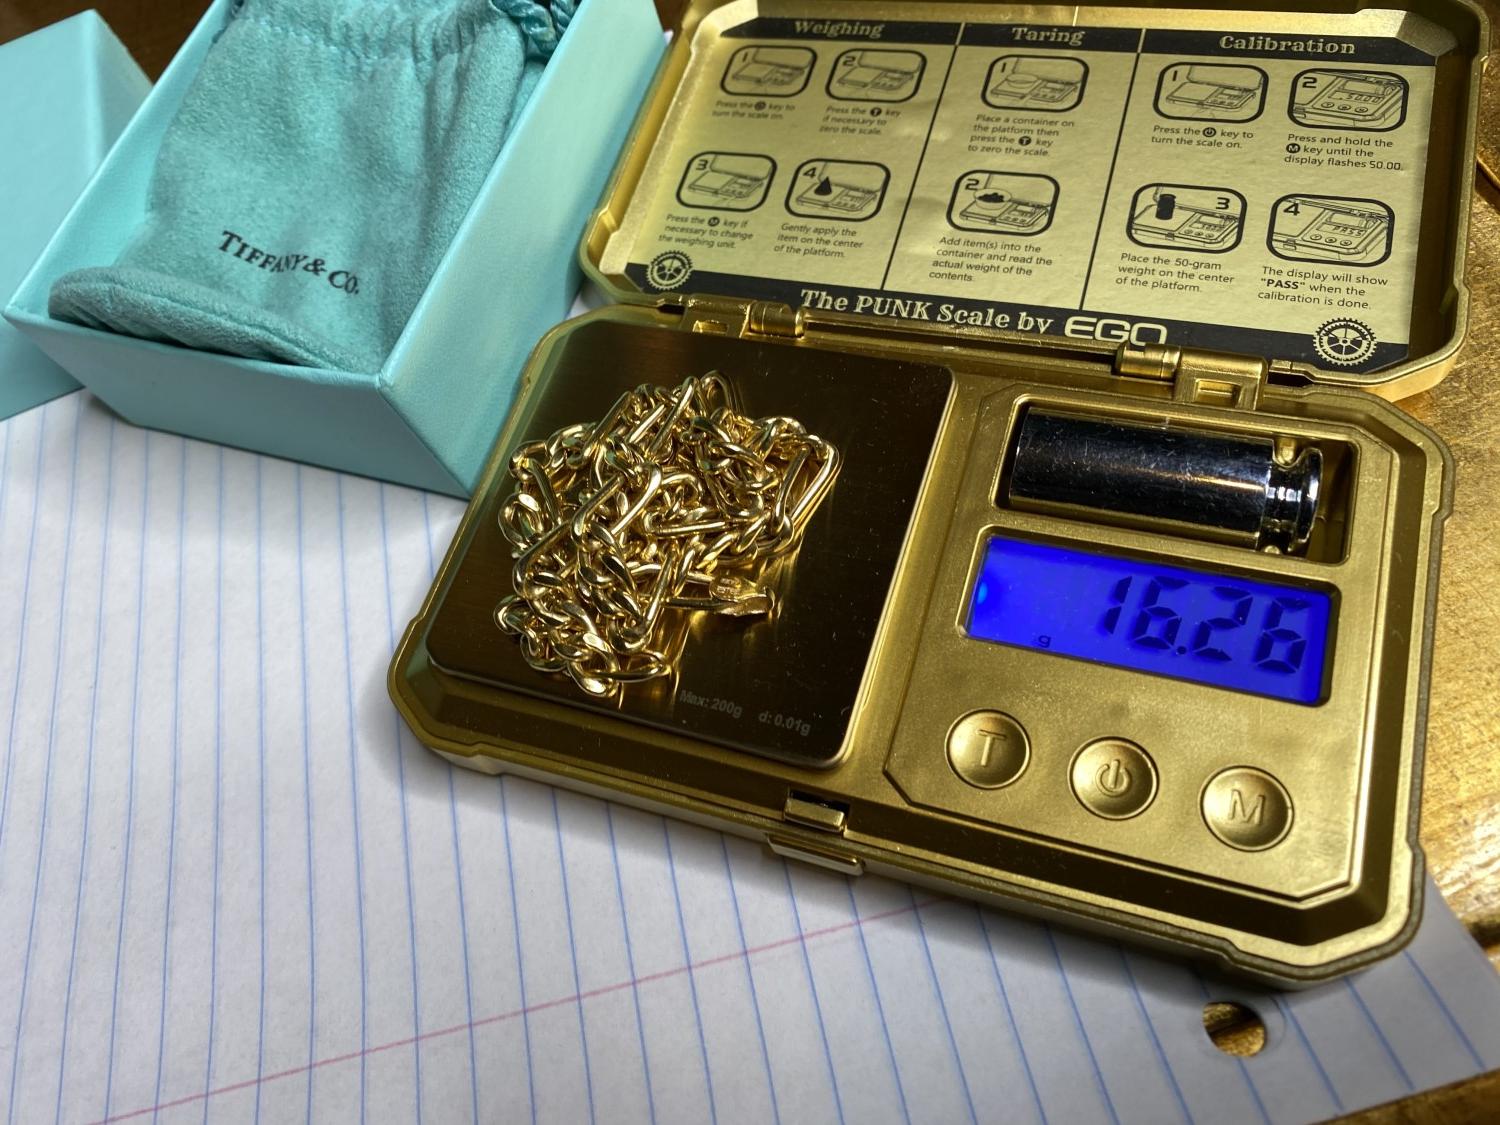 17" 14k gold Necklace - 16.26 grams